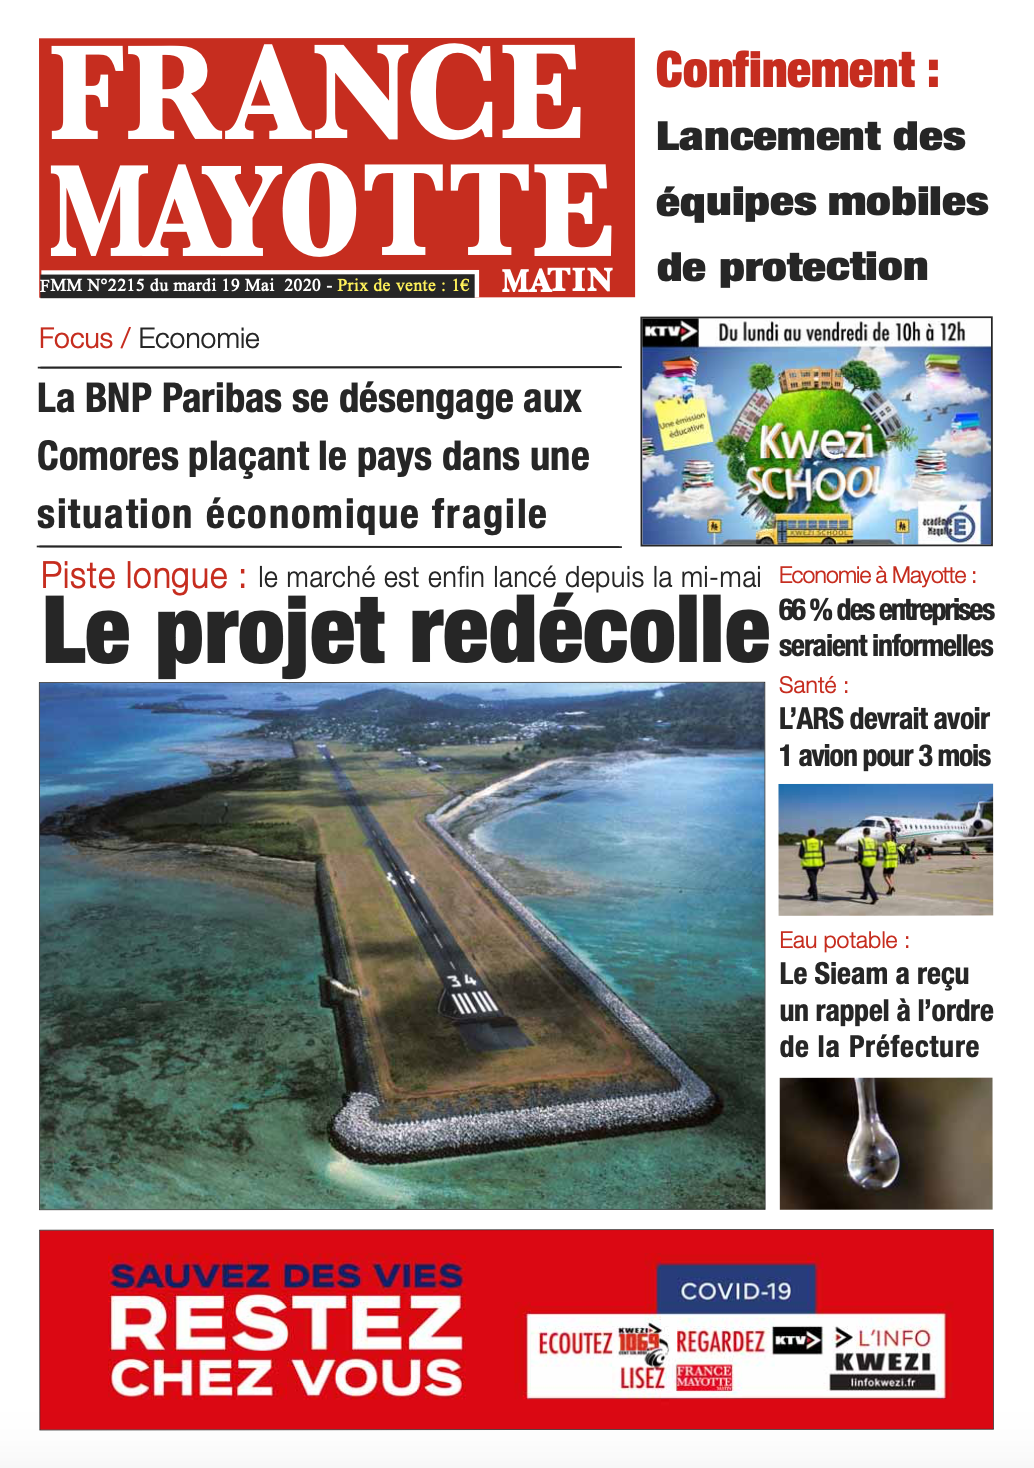 France Mayotte Mardi 19 mai 2020